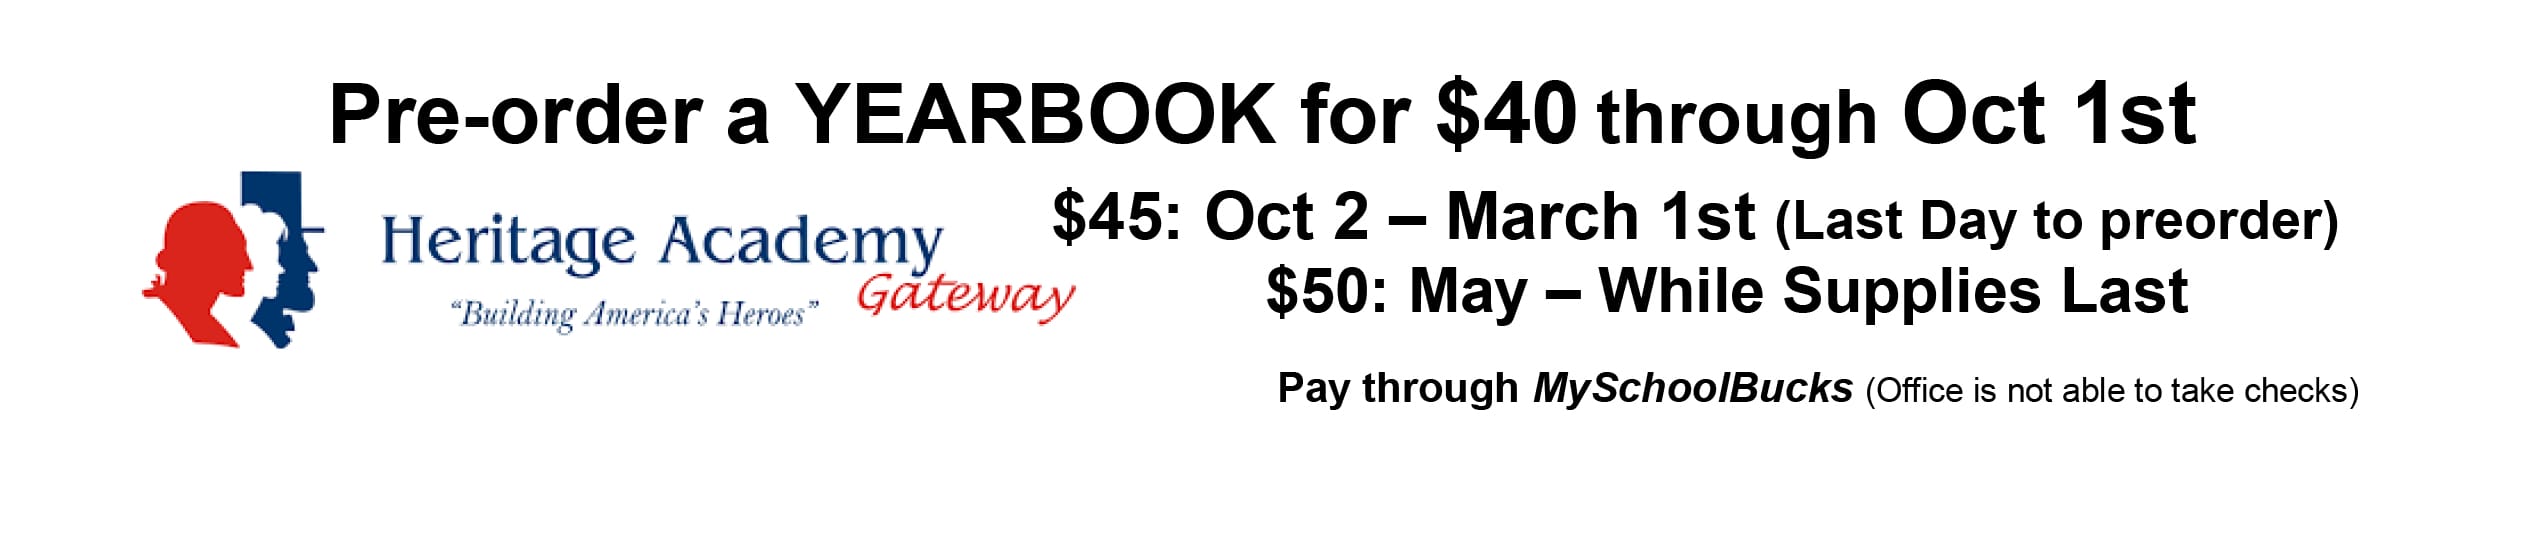 Yearbook-price.dates_